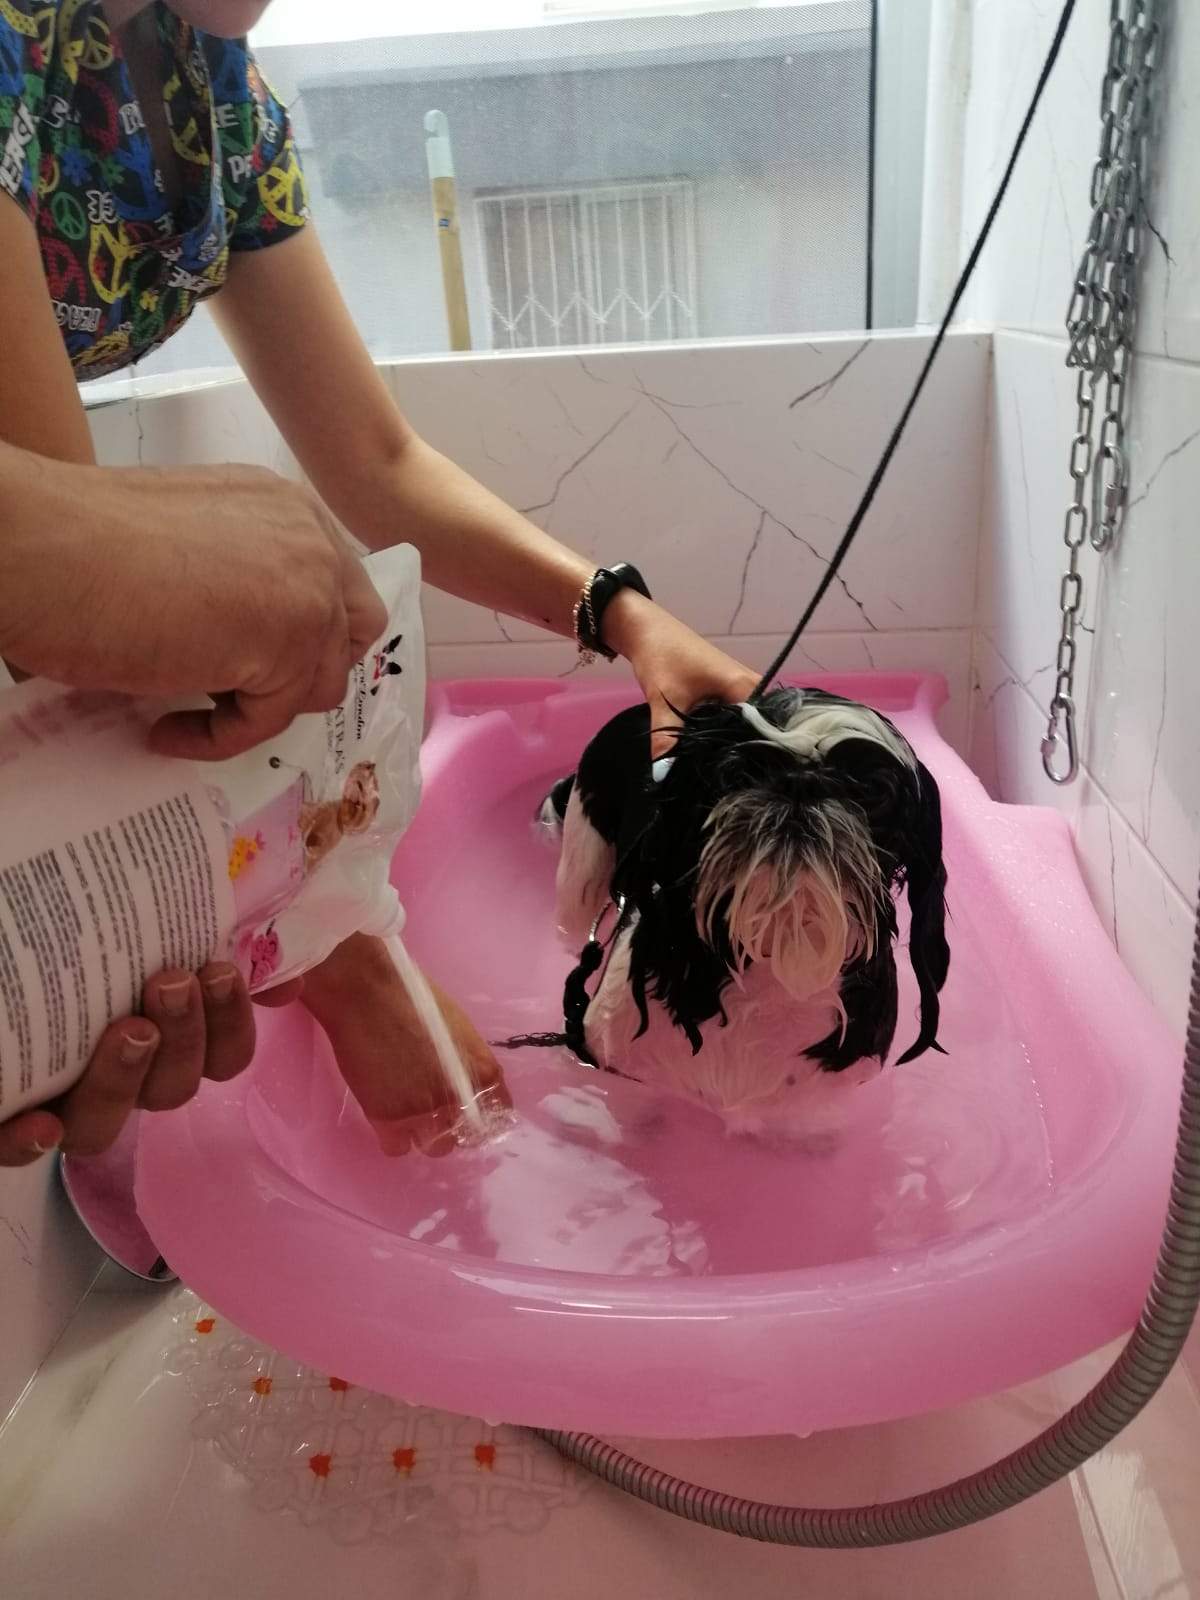 Cleopatra's Doggy Milk Bath Spa Product Warren London 